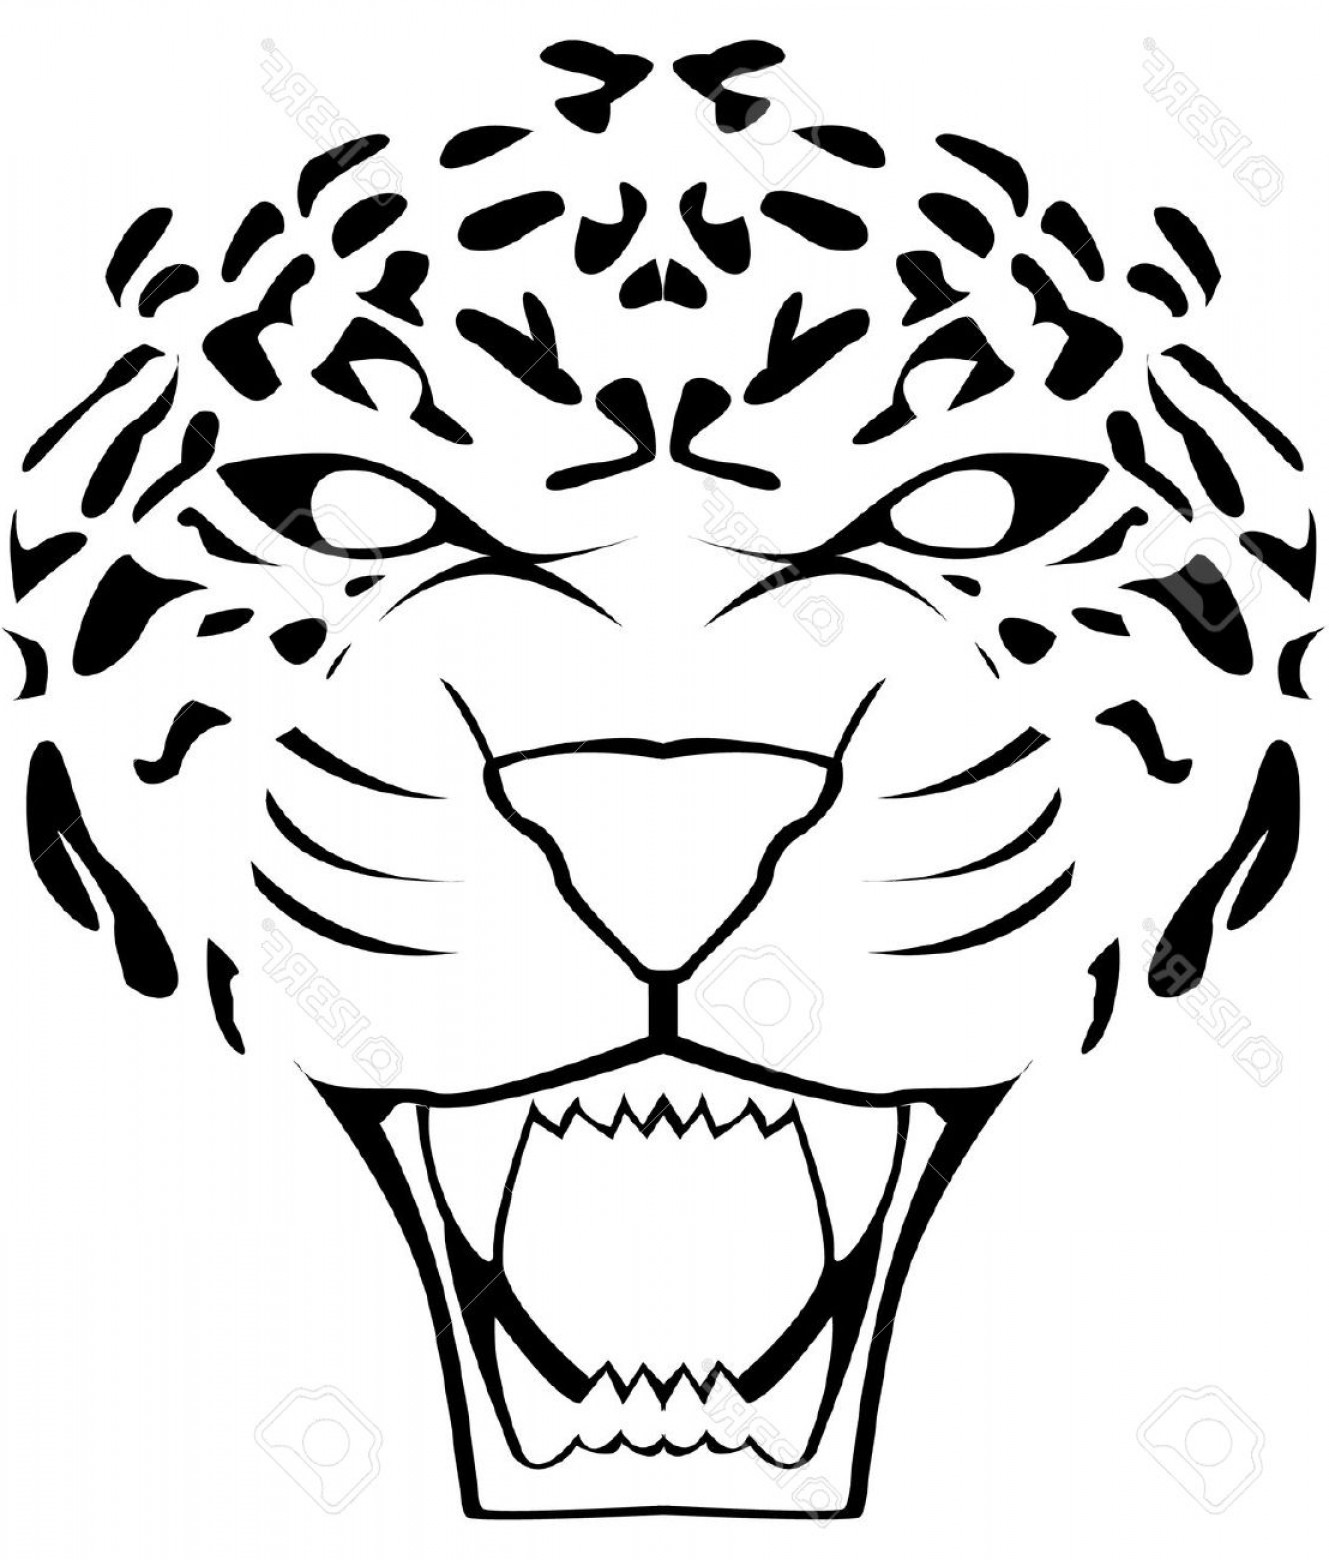 Леопард голова контур